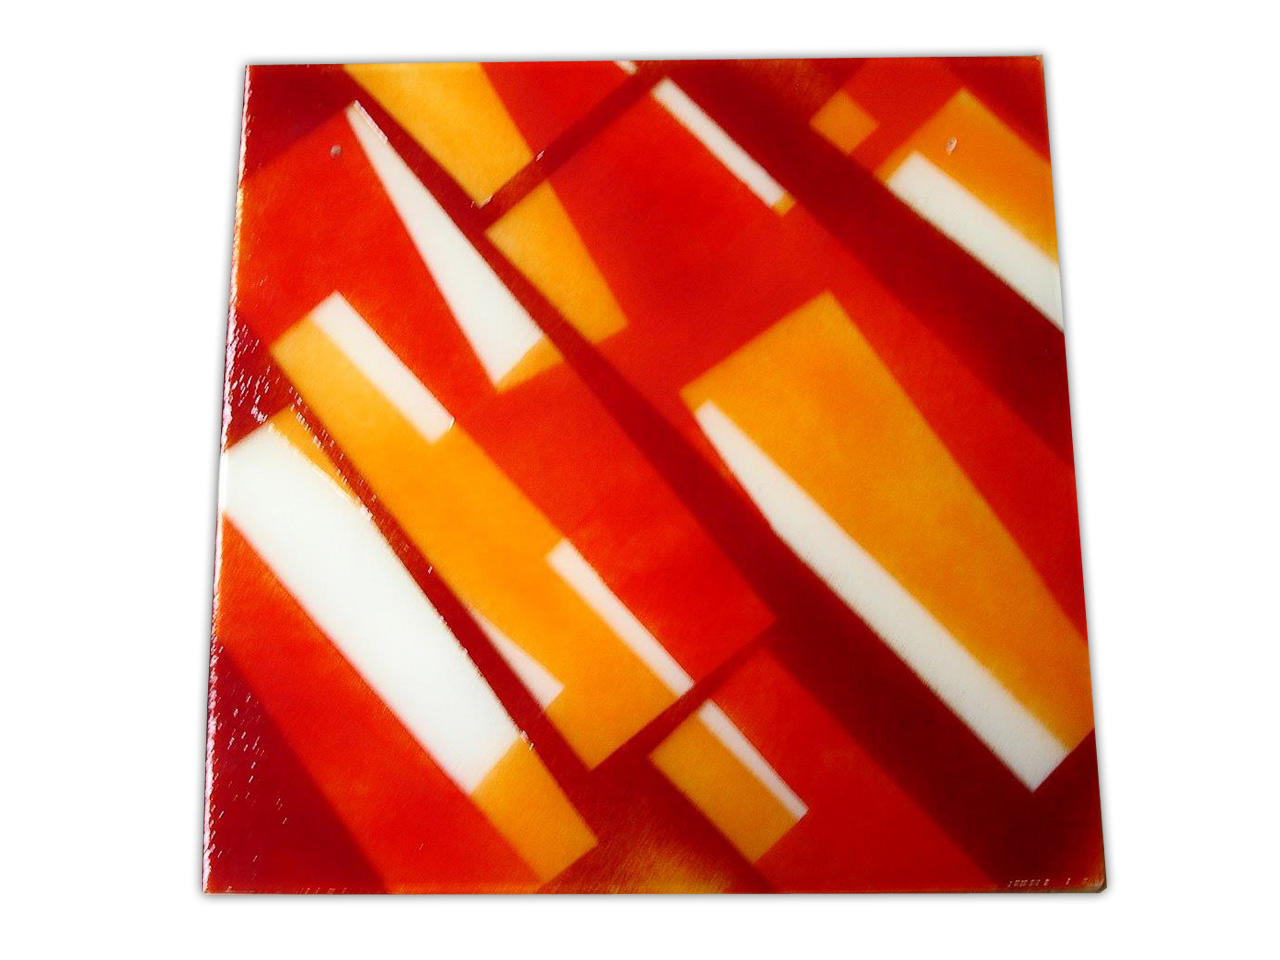 glass in interiorsGlass tile - orange/red rectangles